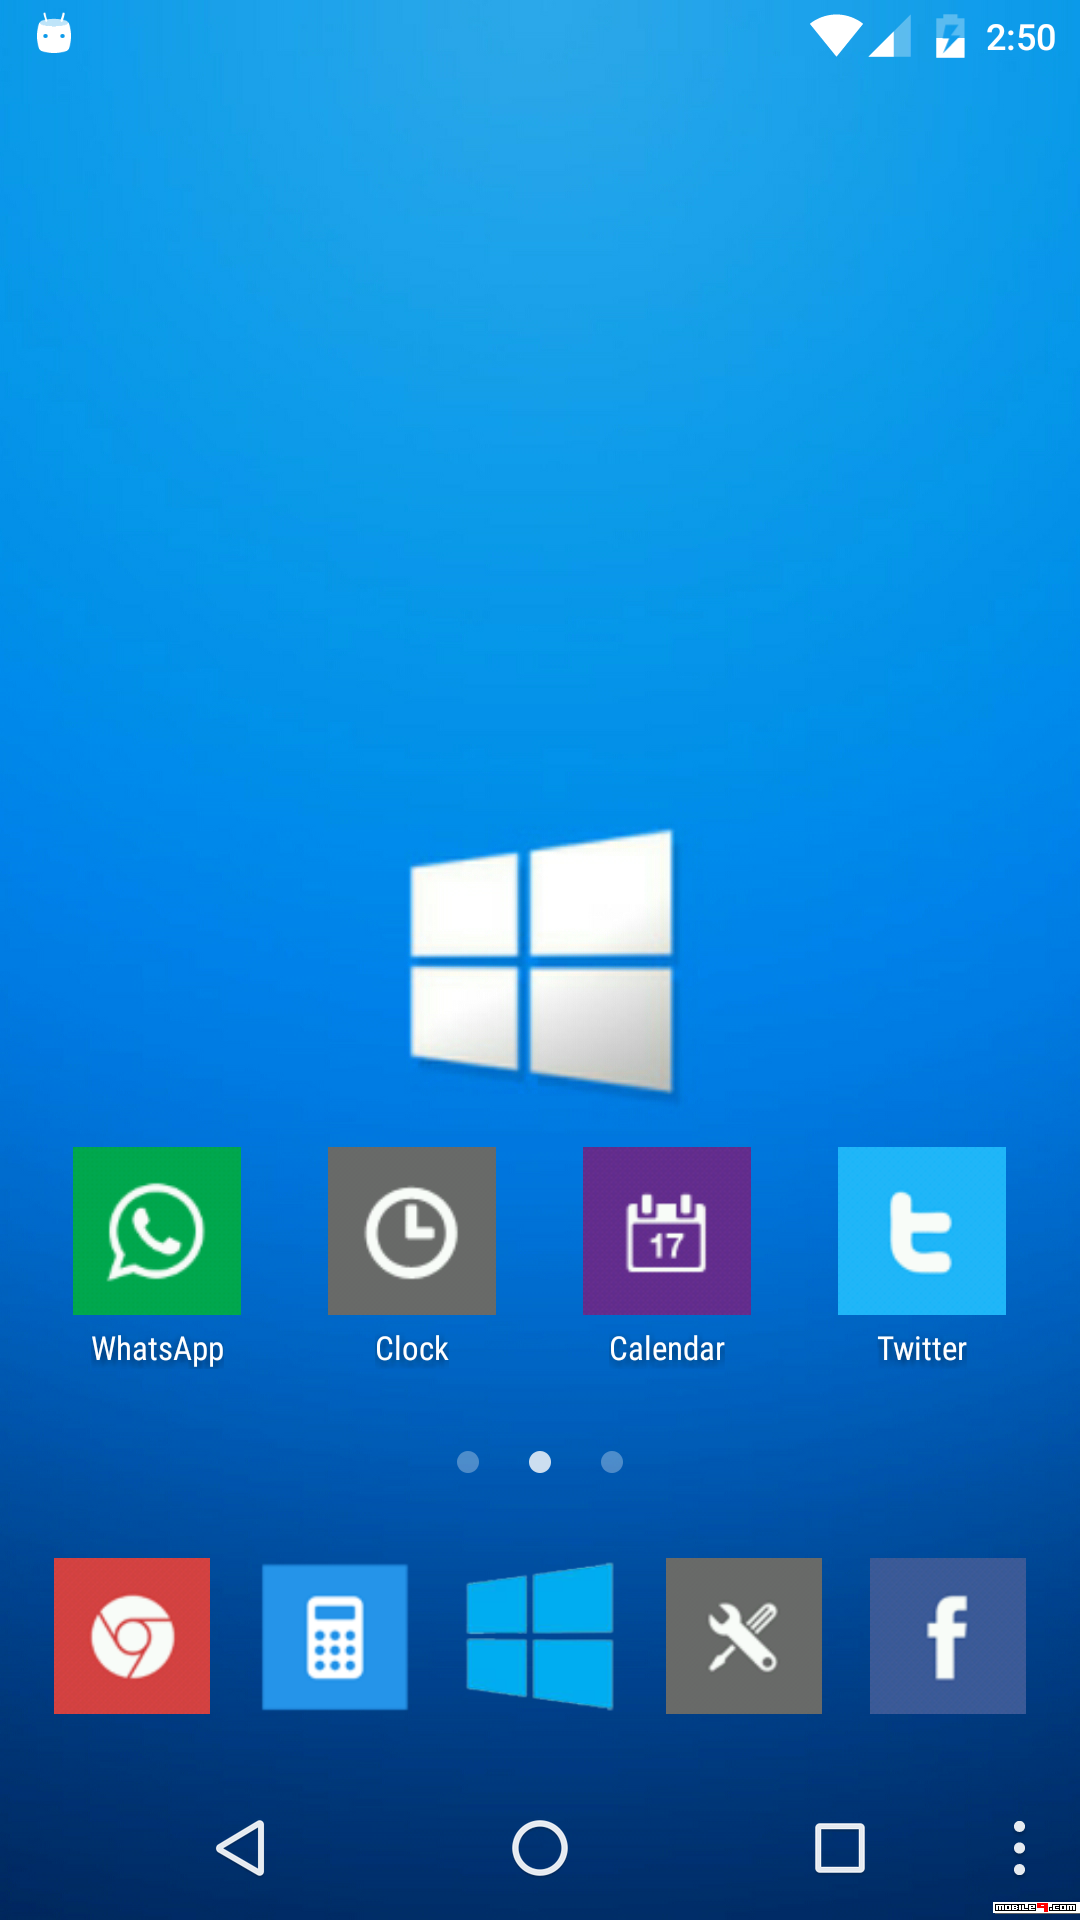 windows 10 free icon pack